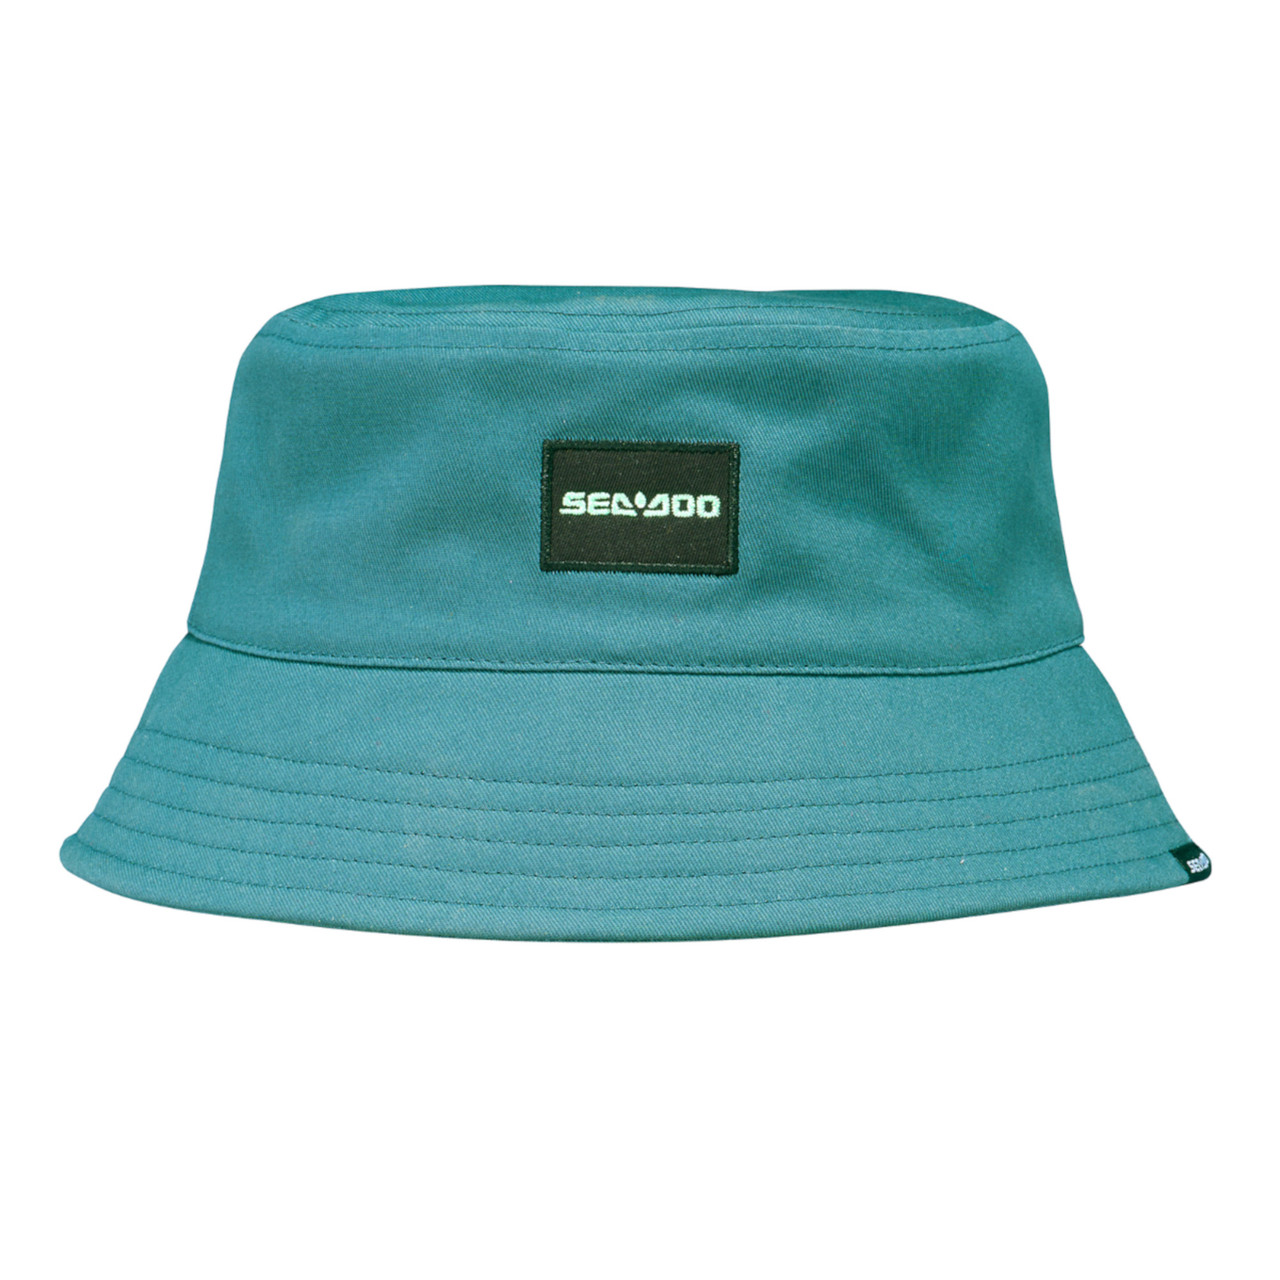 Sea-Doo New OEM, Unisex Onesize Cotton Branded Bucket Hat, 4546240074